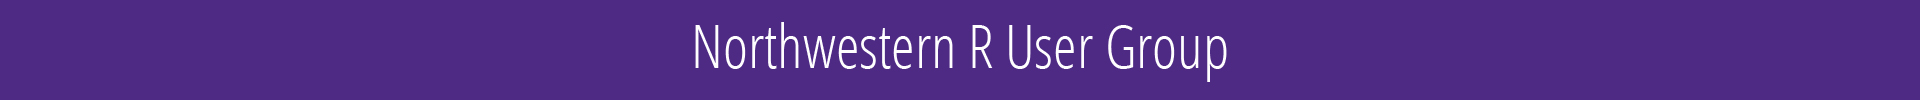 Northwestern R User Group banner image